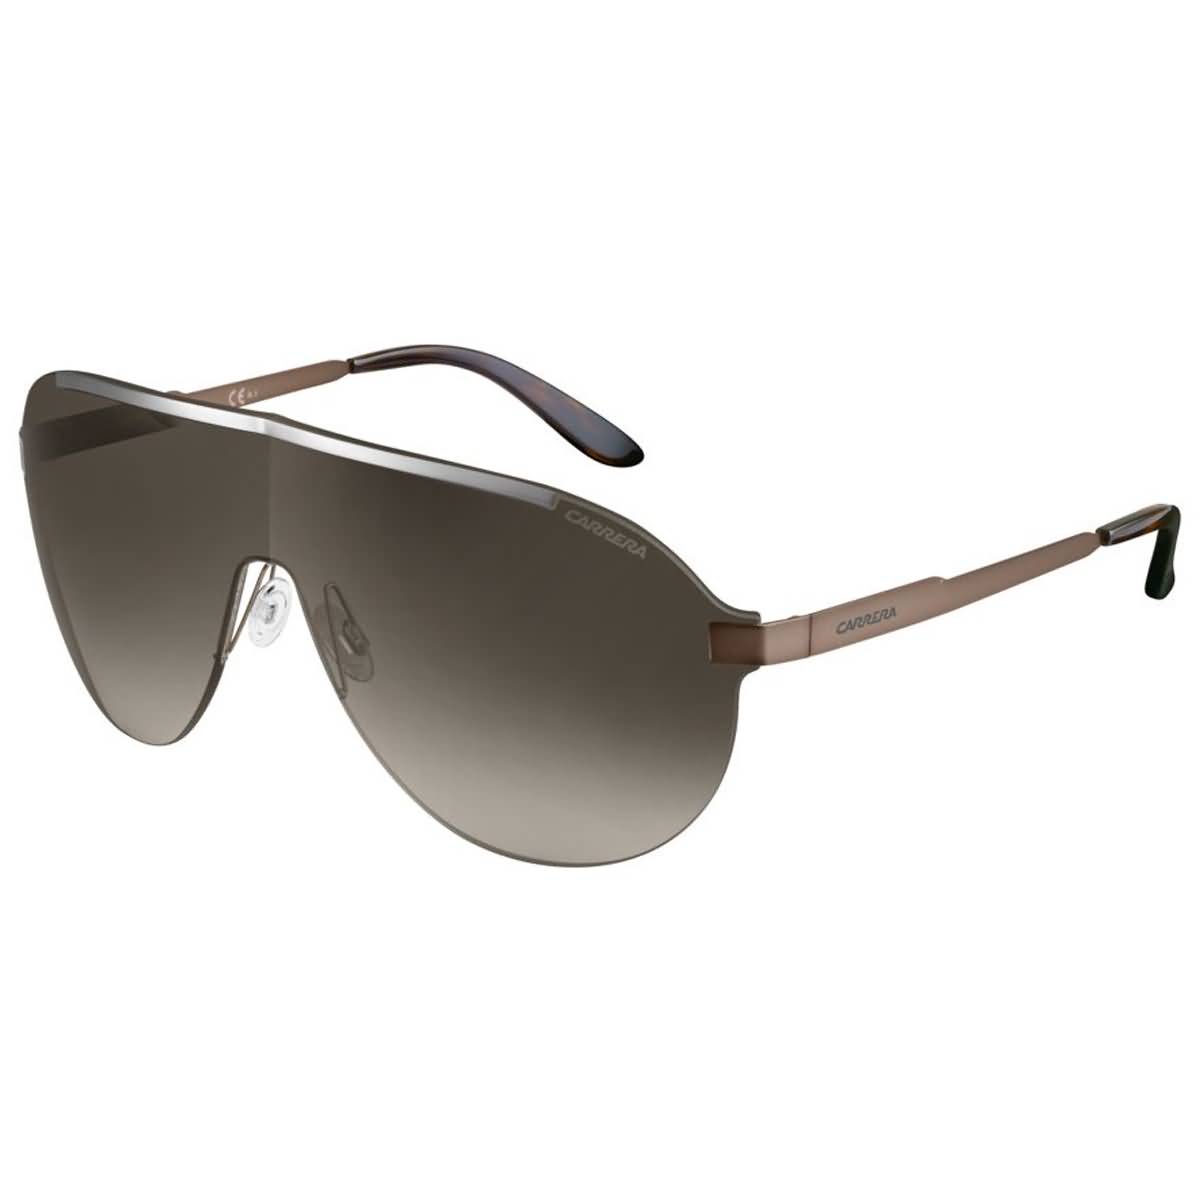 CHPO Brand – Sunglasses,New Sunglasses